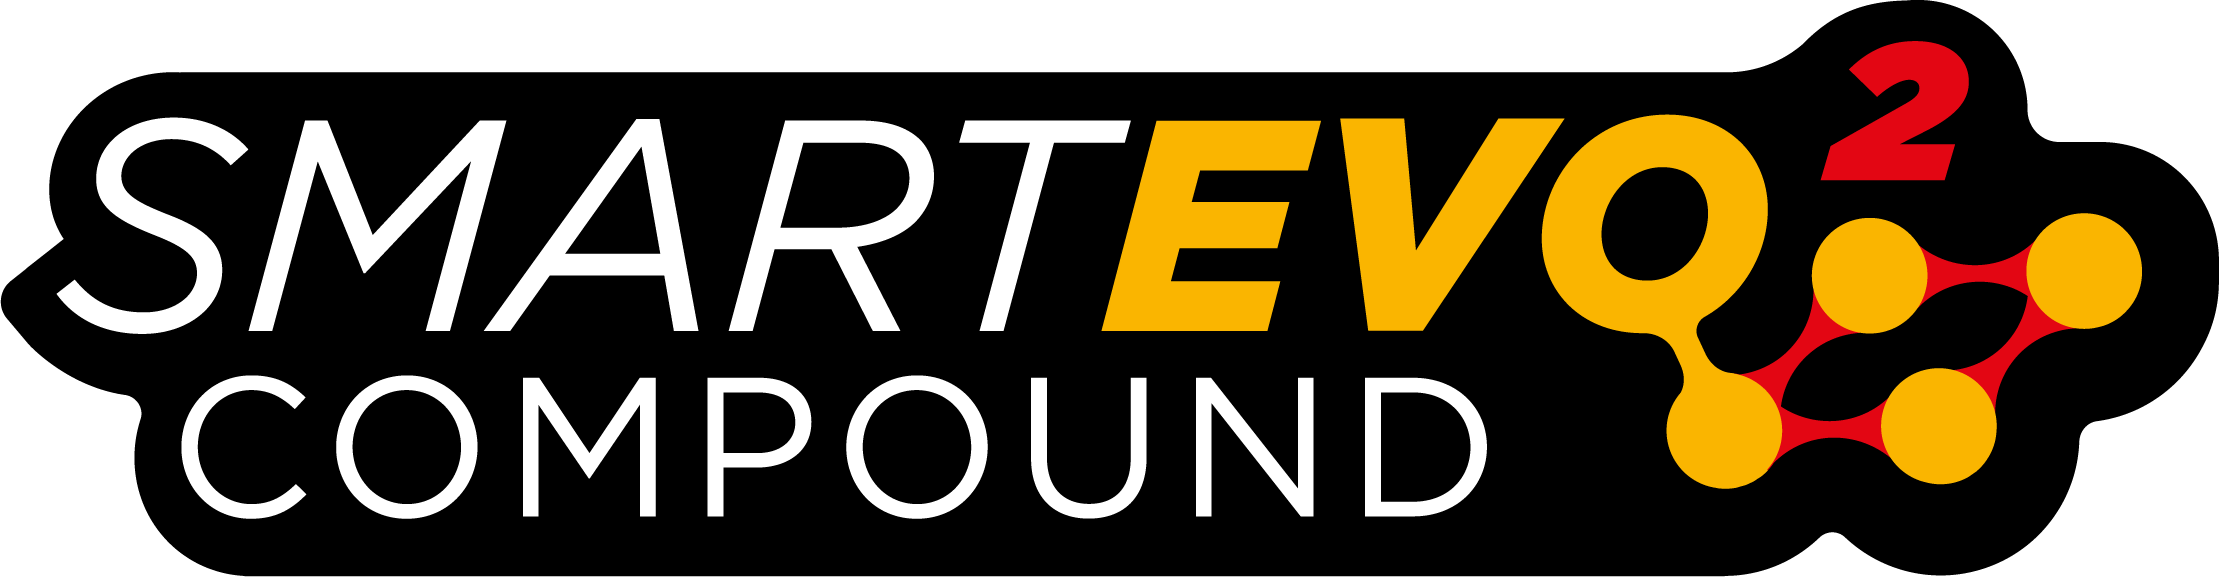 SmartEVO² Compound logo